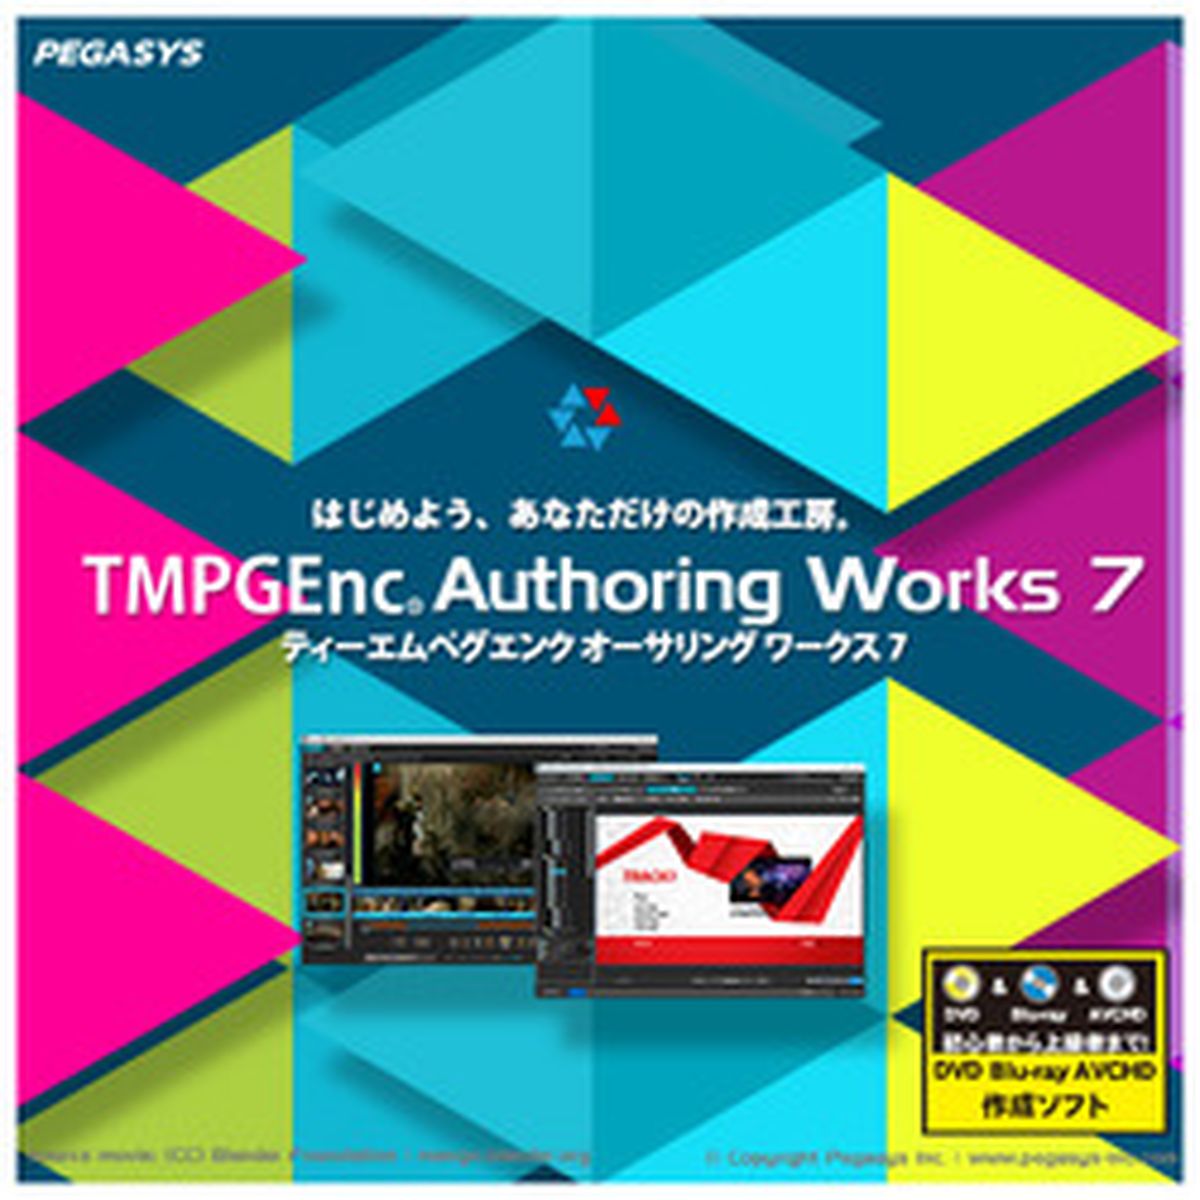 TMPGEnc Authoring Works 7 ダウンロード版